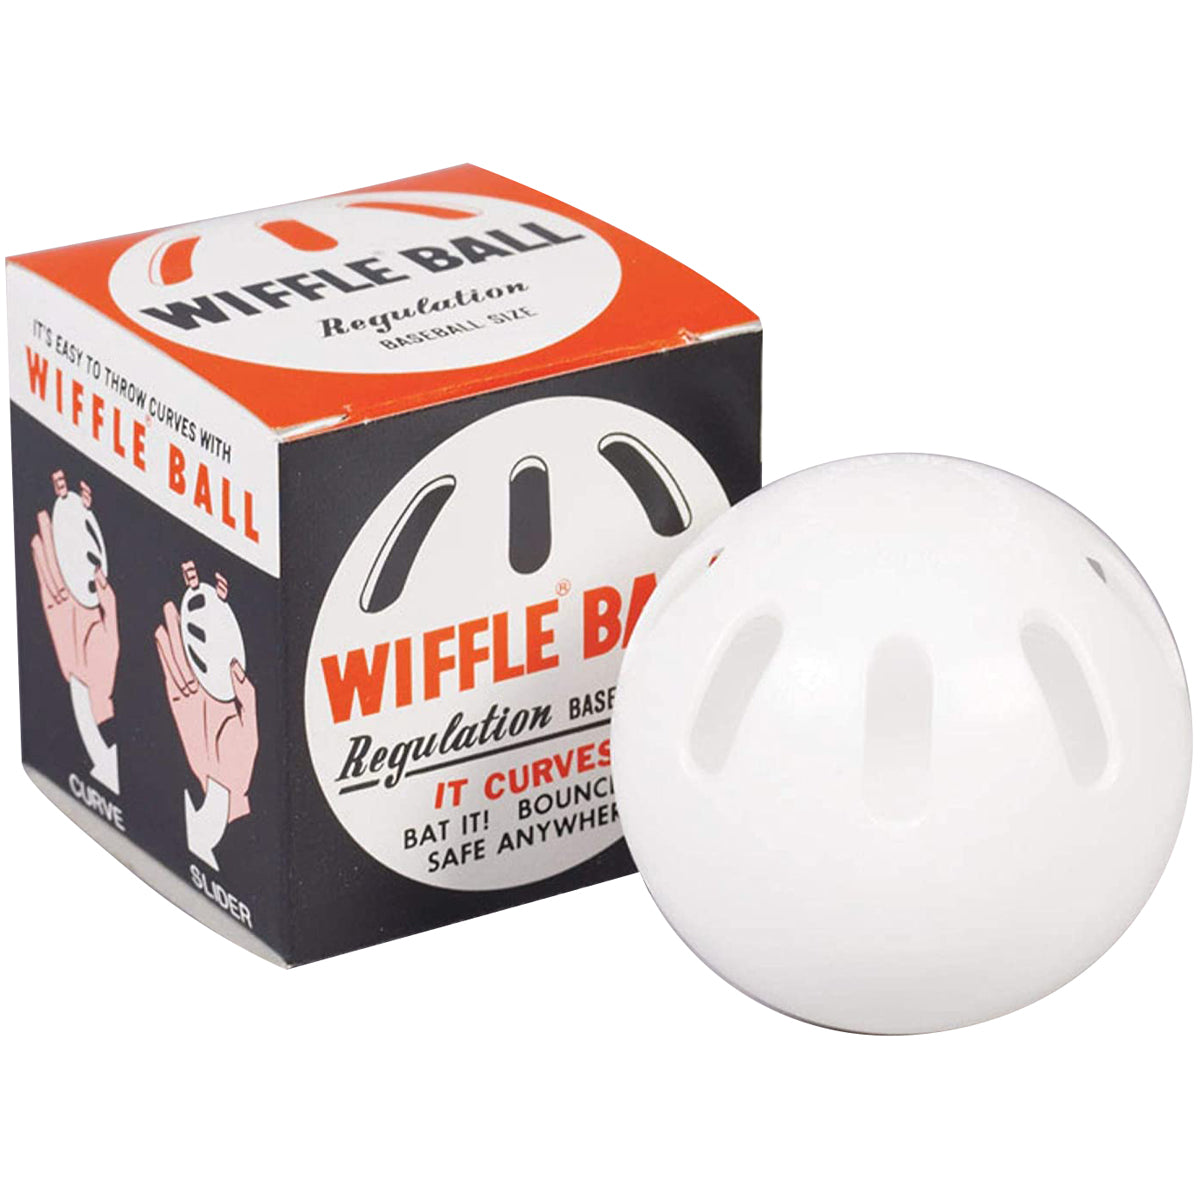 Wiffle Ball 9" Original Regulation Baseball Size Curve Training Plastic Ball Wiffle Ball